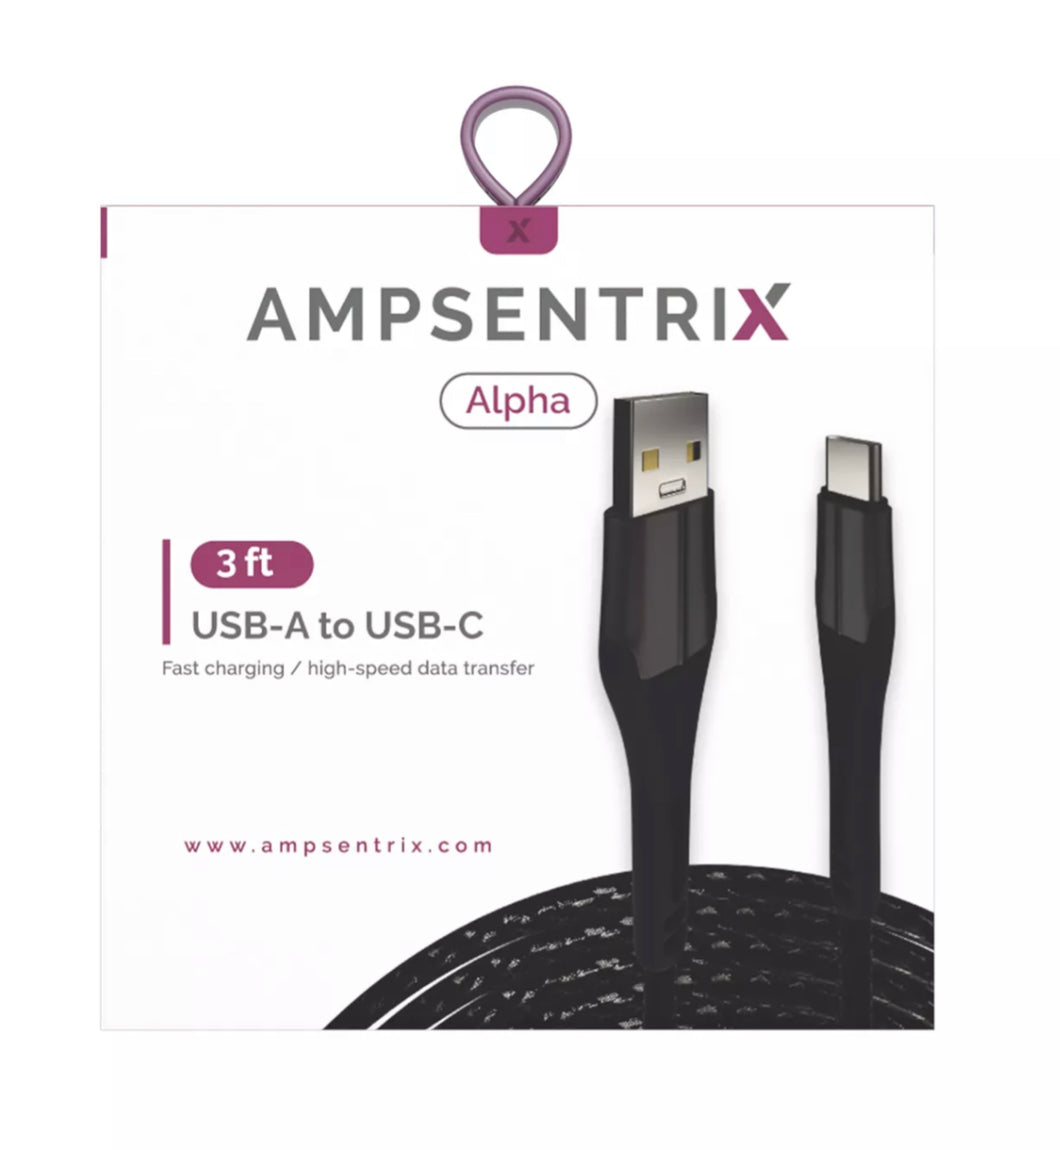 Ampsentrix USB-A to USB-C 3ft